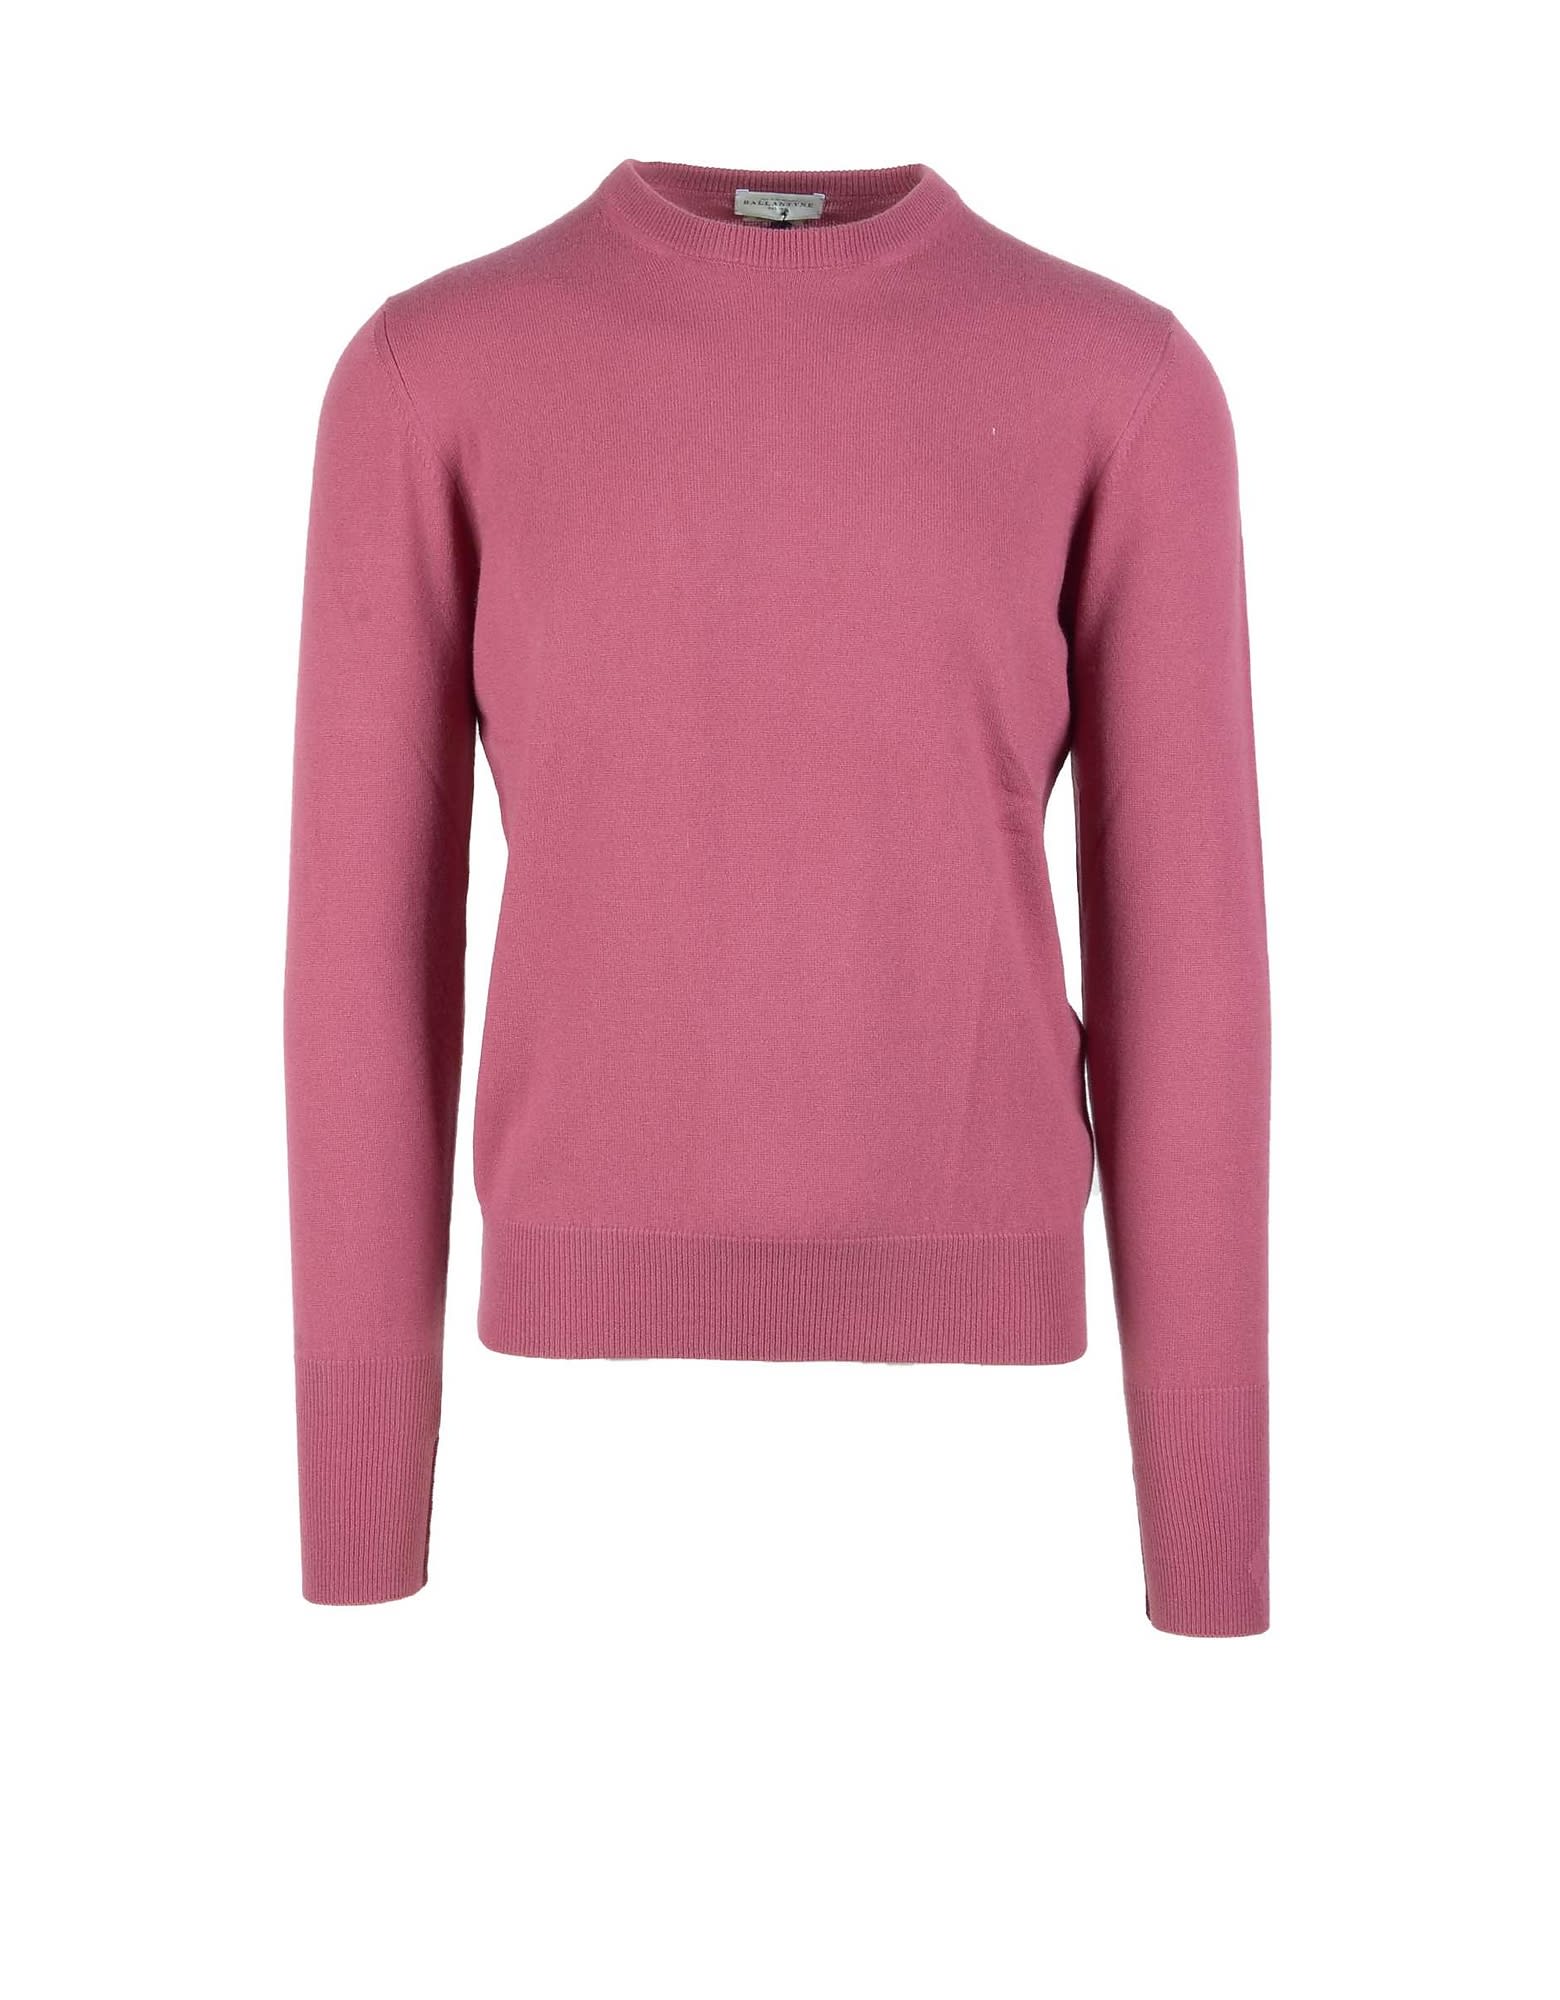 Ballantyne Mens Antique Pink Sweater